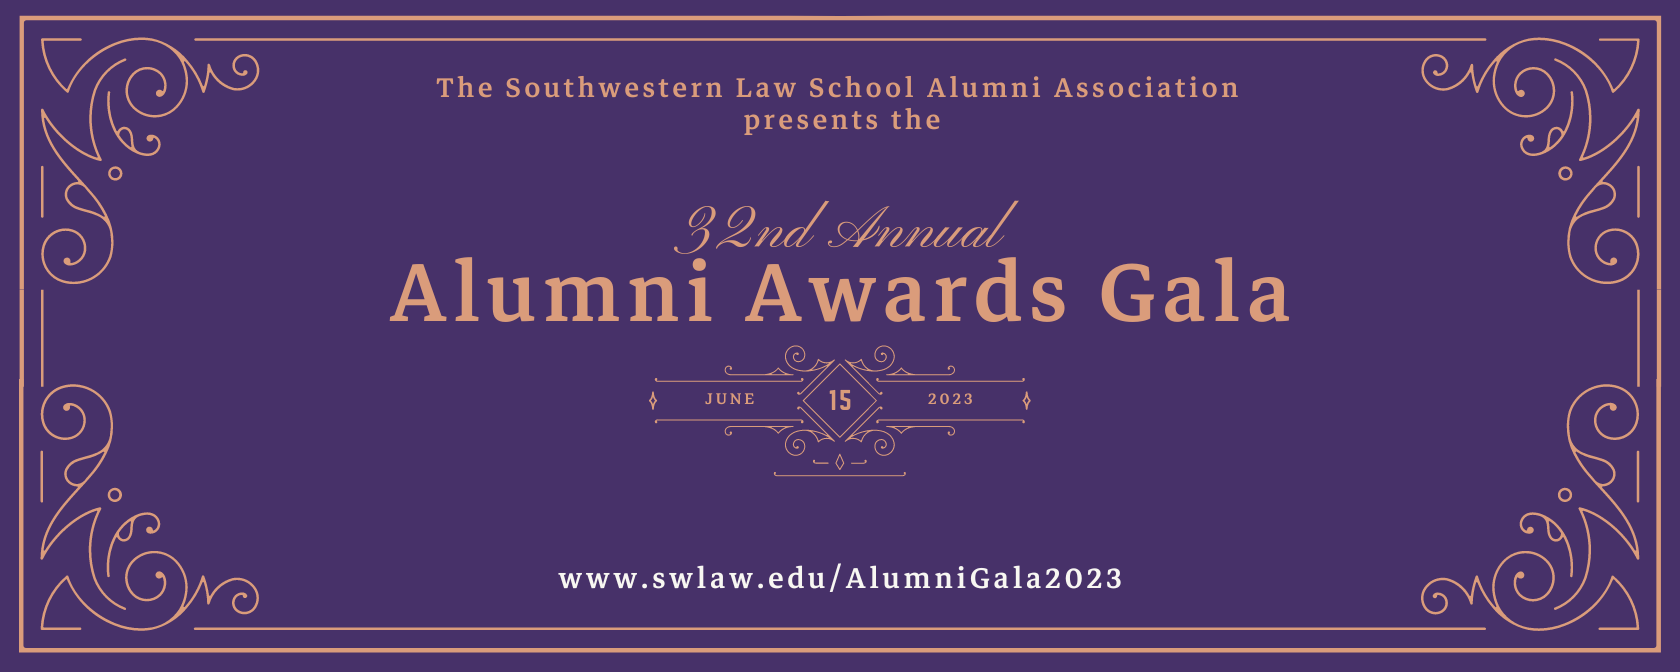 Alumni Awards Gala Banner